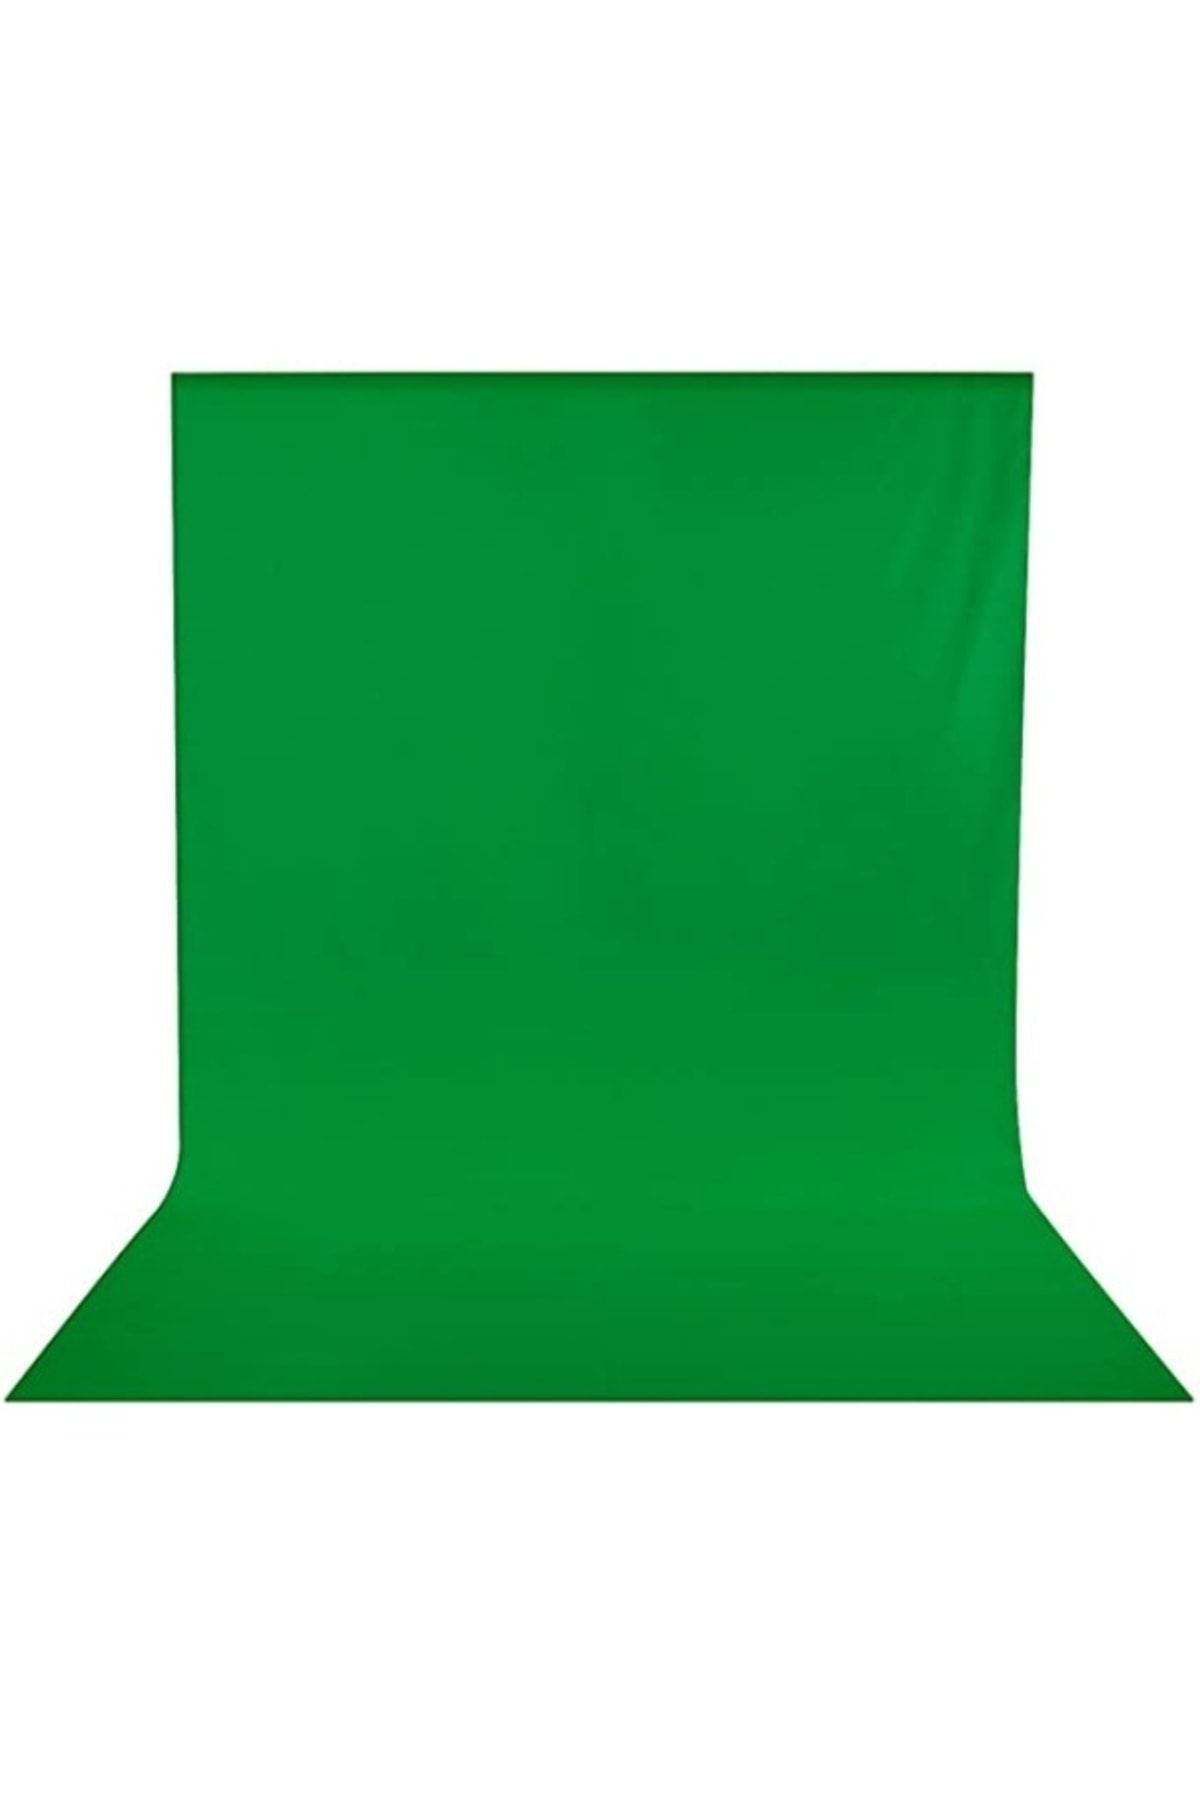 Genel Markalar (2x3 M) Chromakey-green Screen- Greenbox Yeşil Fon Perde- % 100 Pamuk